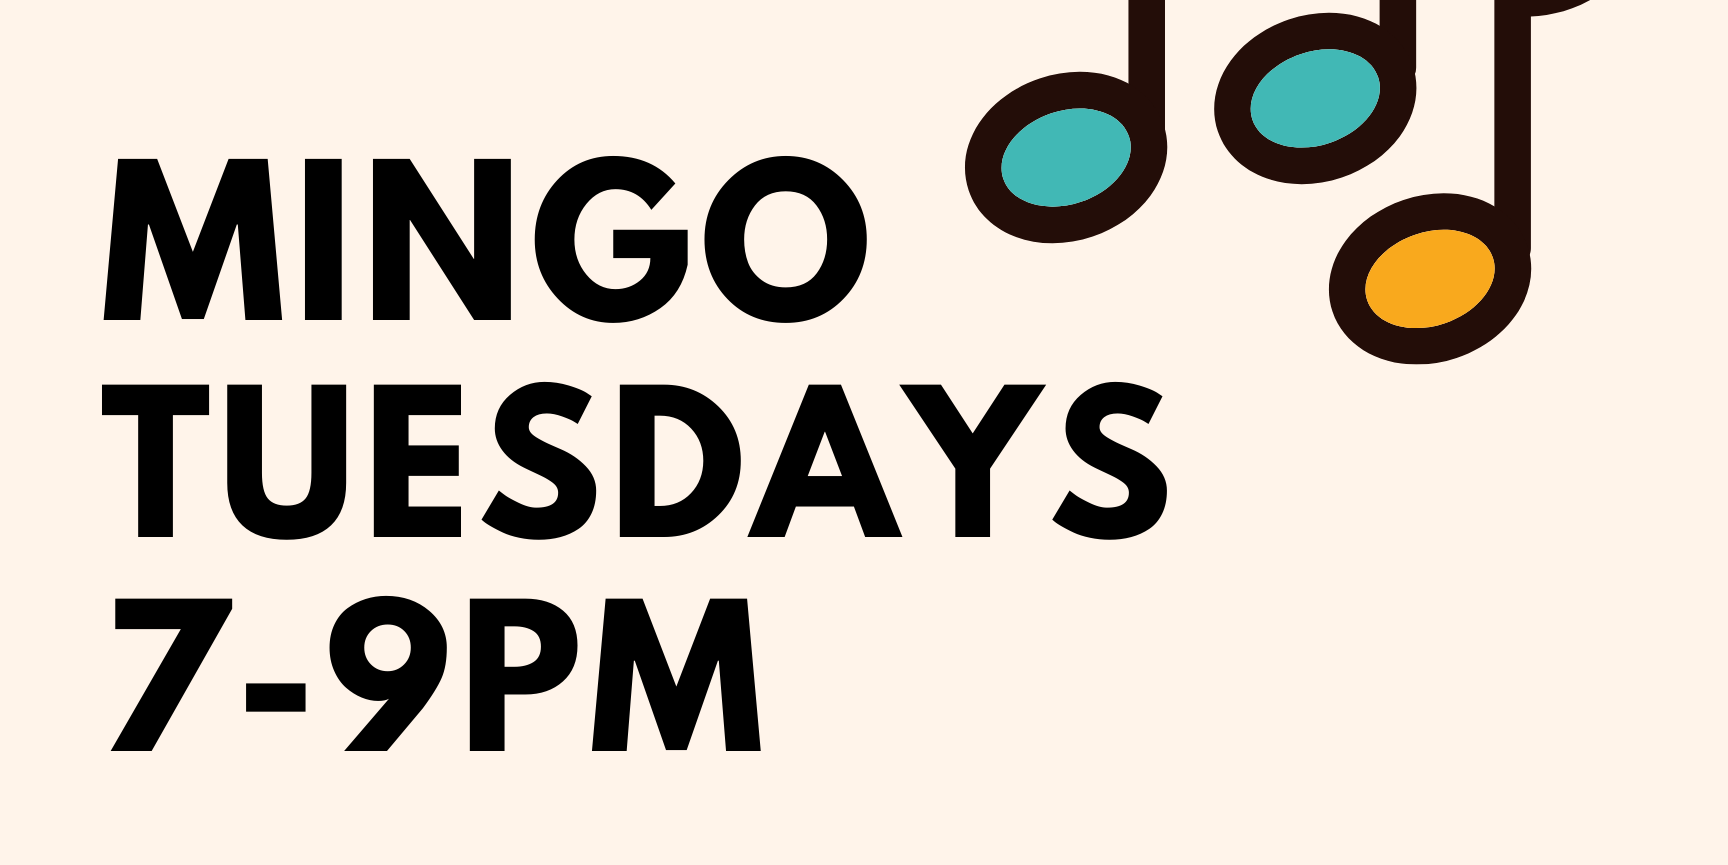 MINGO (Music + Bingo) at Caswell Station promotional image